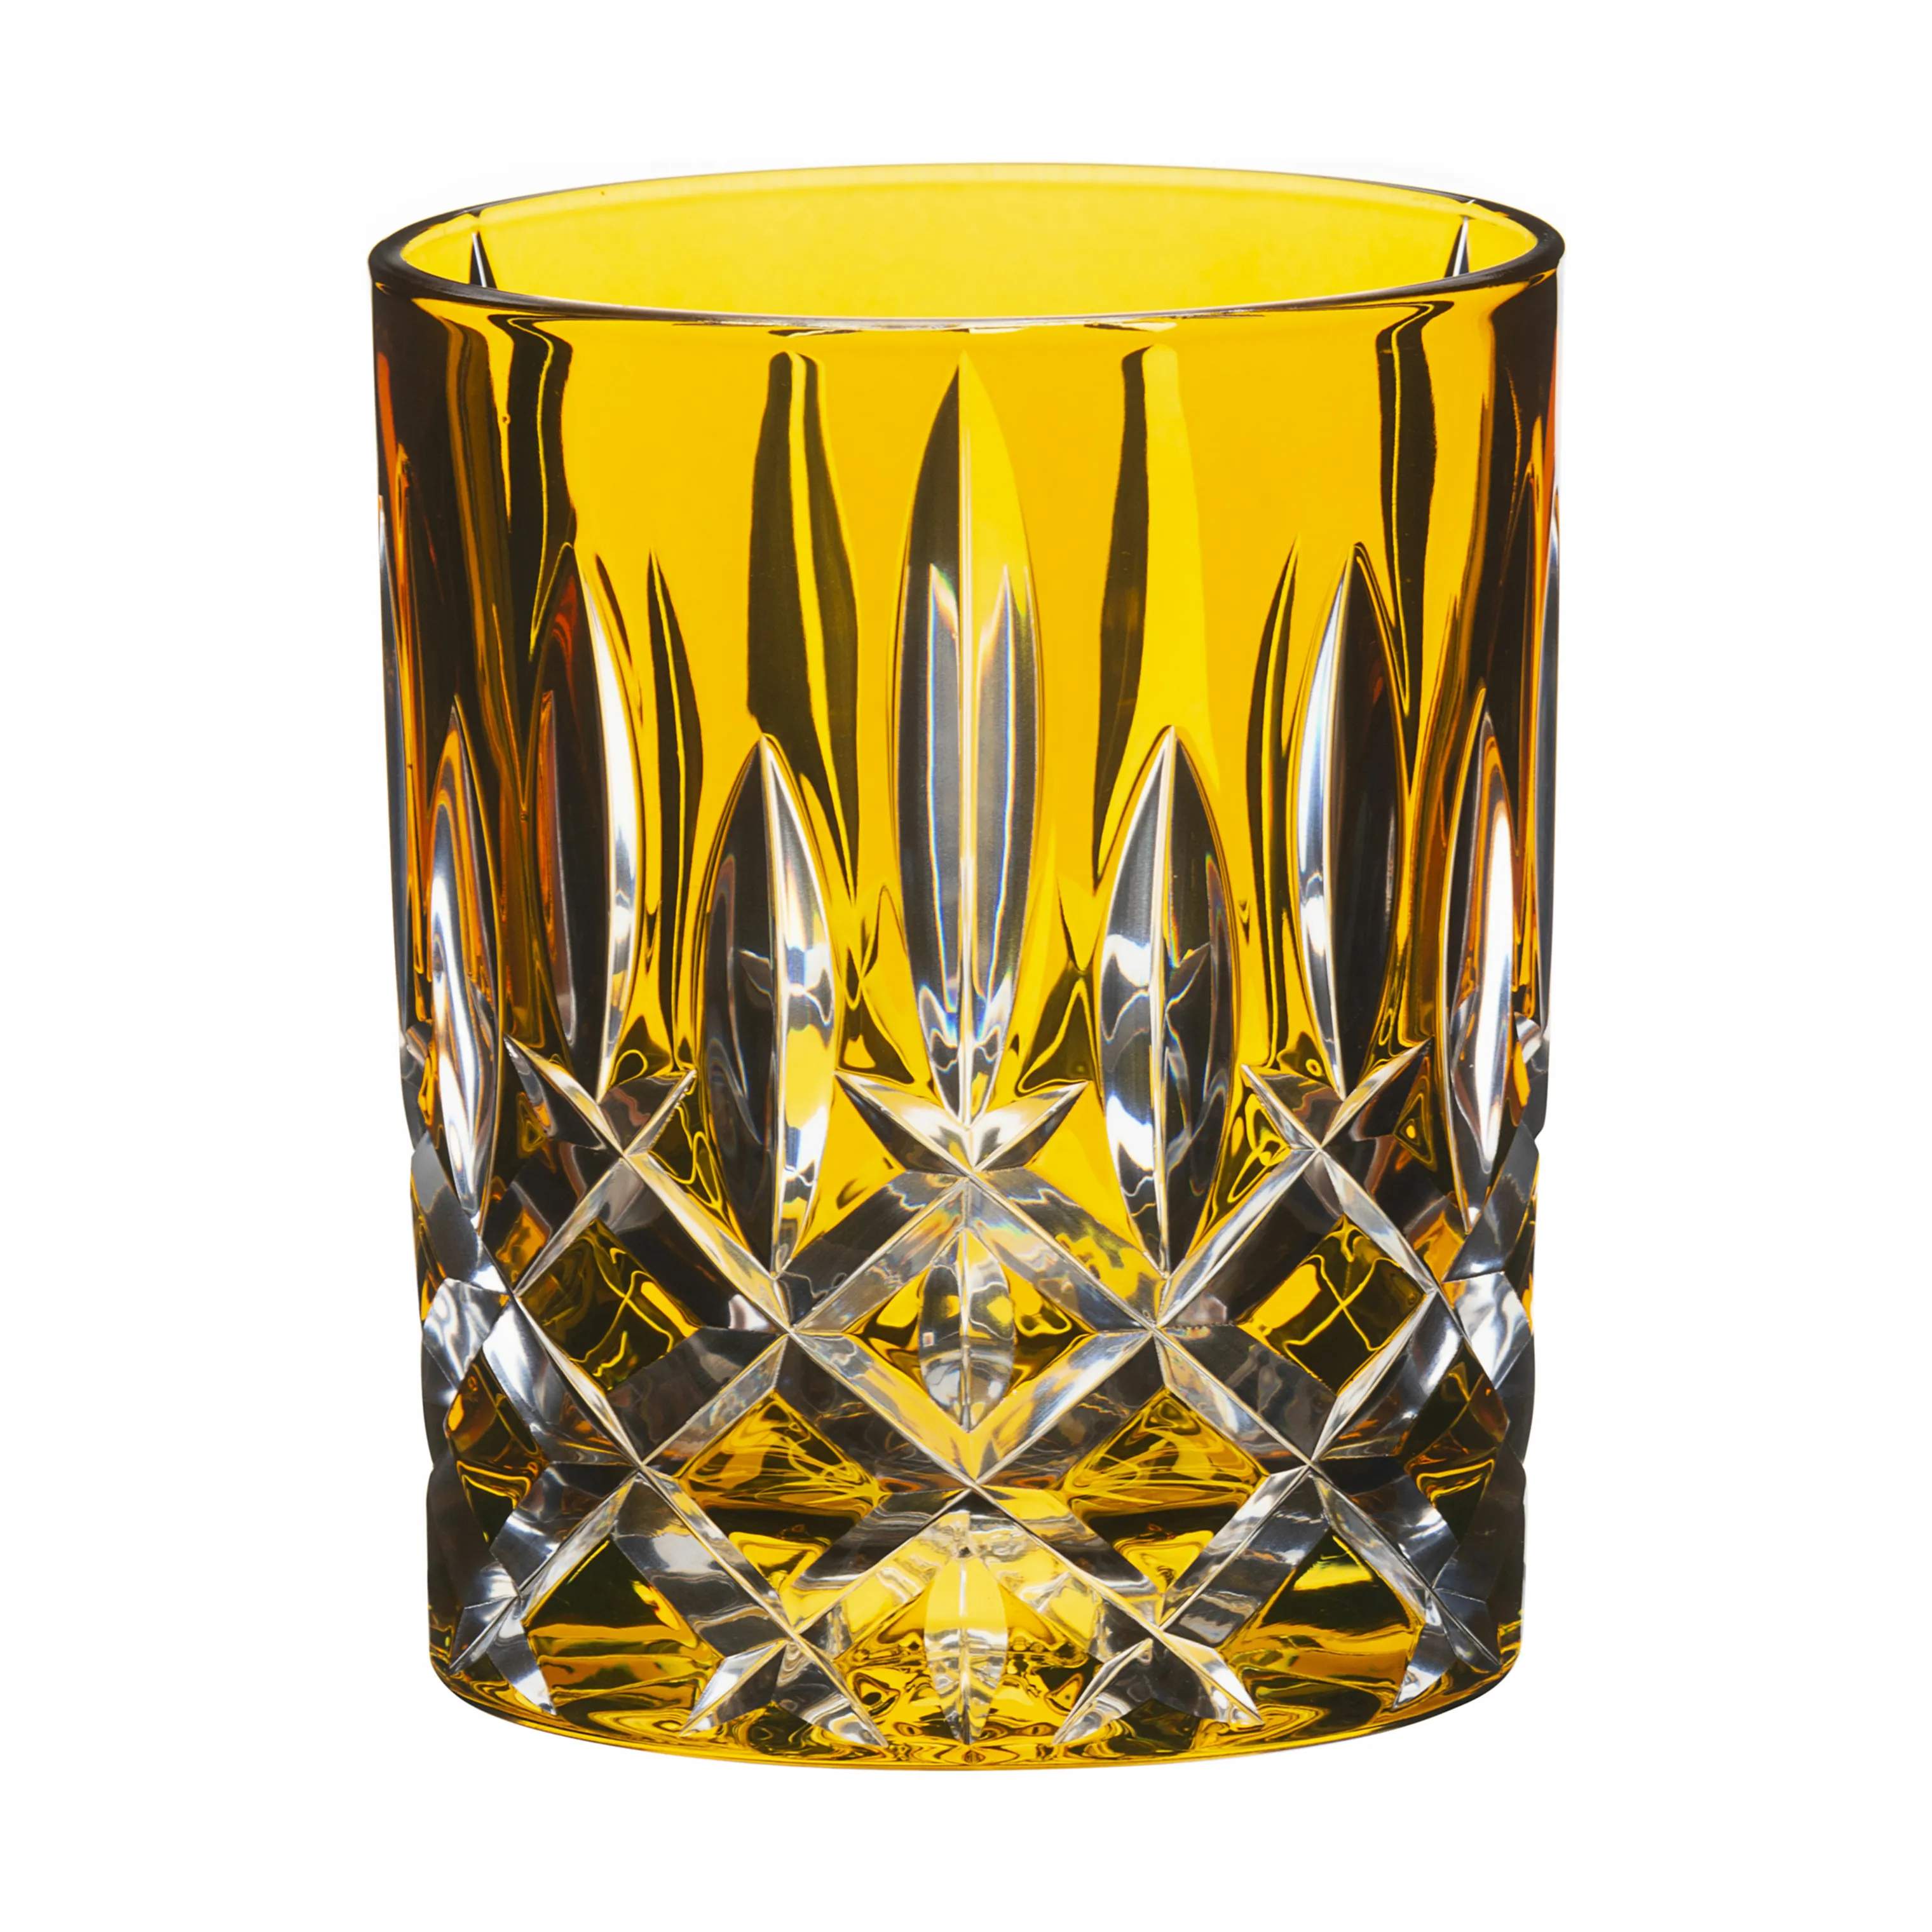 Laudon Vandglas, amber, large